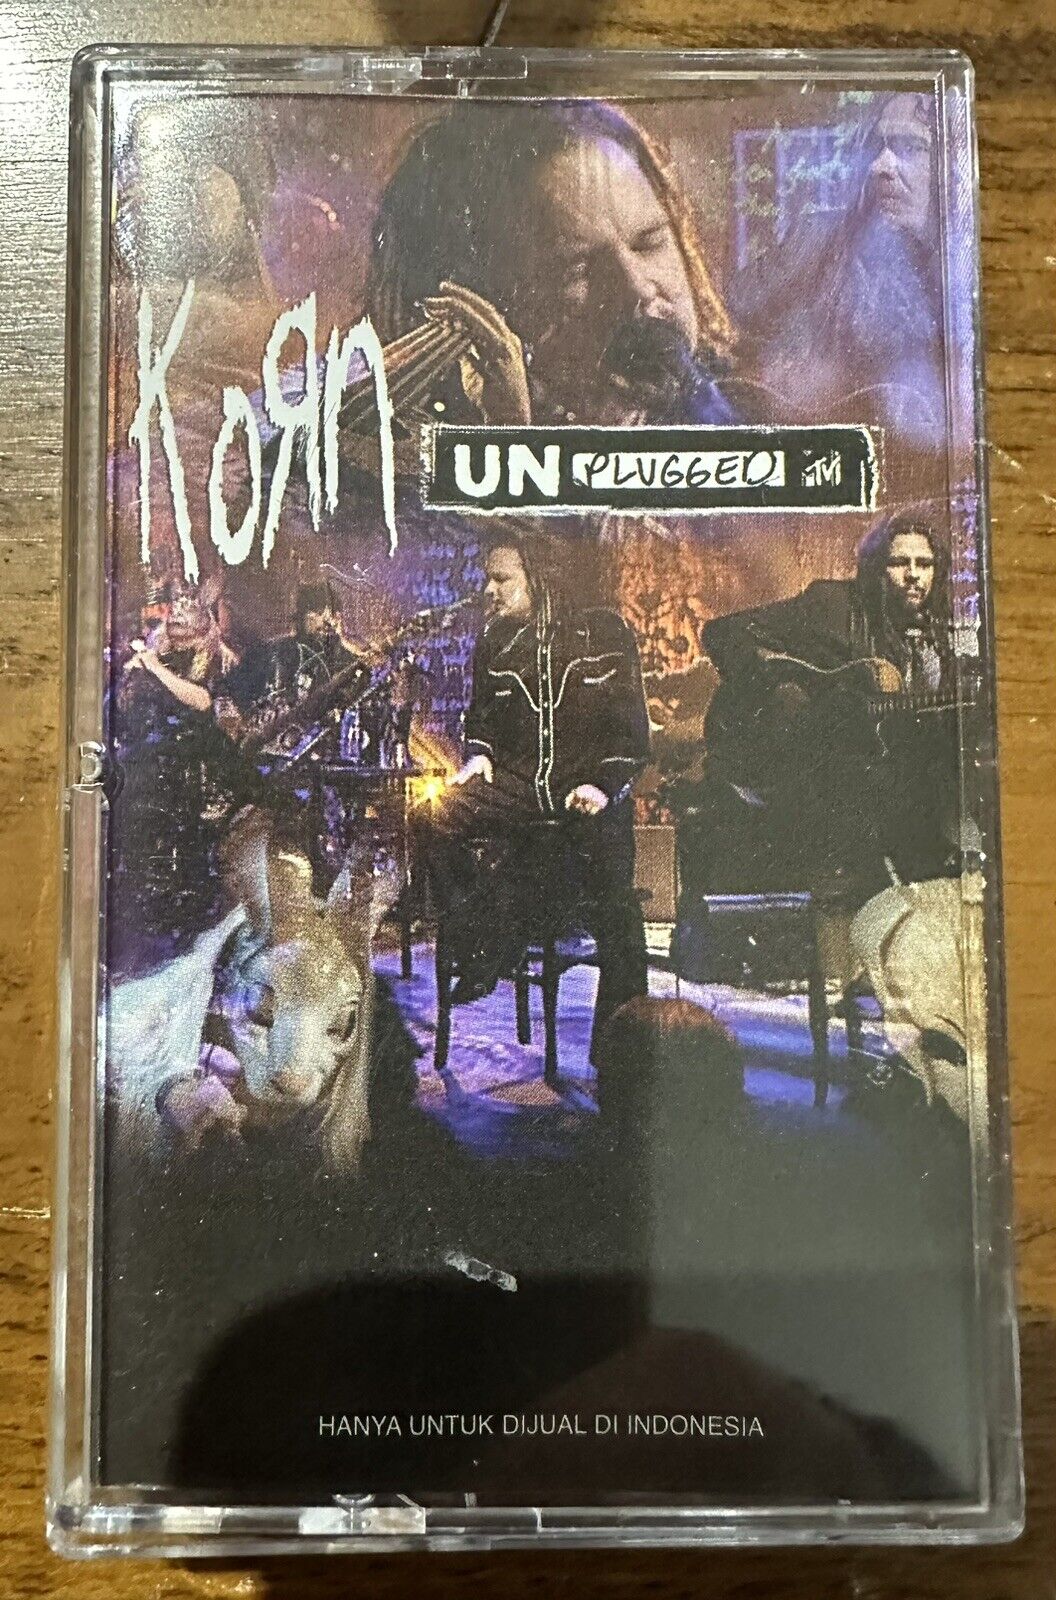 KORN MTV Unplugged 2007